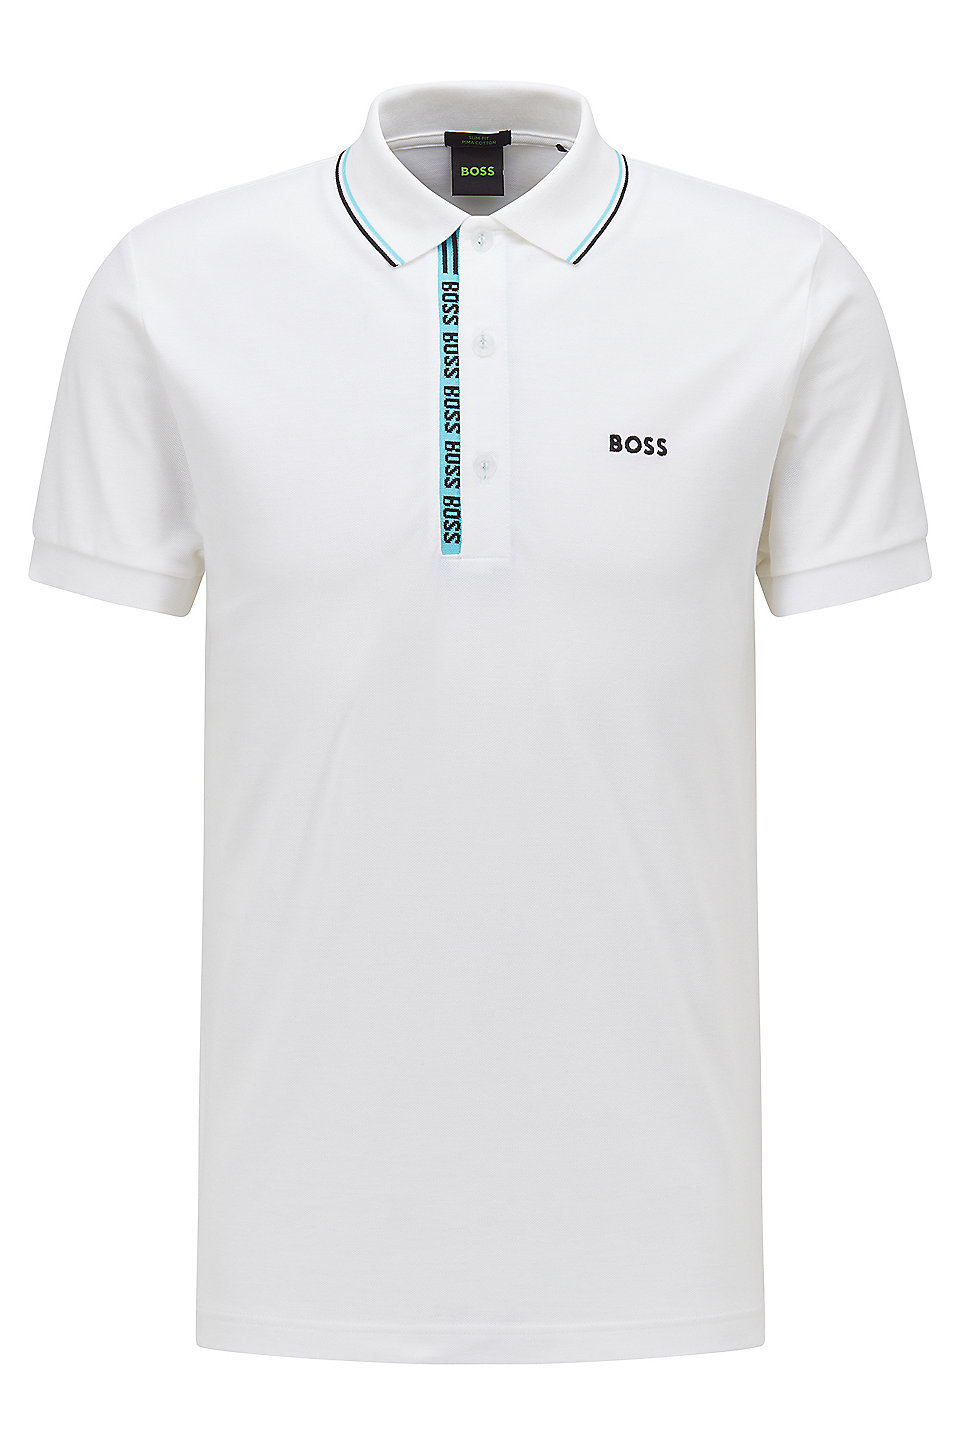 HUGO BOSS White BOSS Men's Paule White Polo Shirt XX-Large 100% Cotton